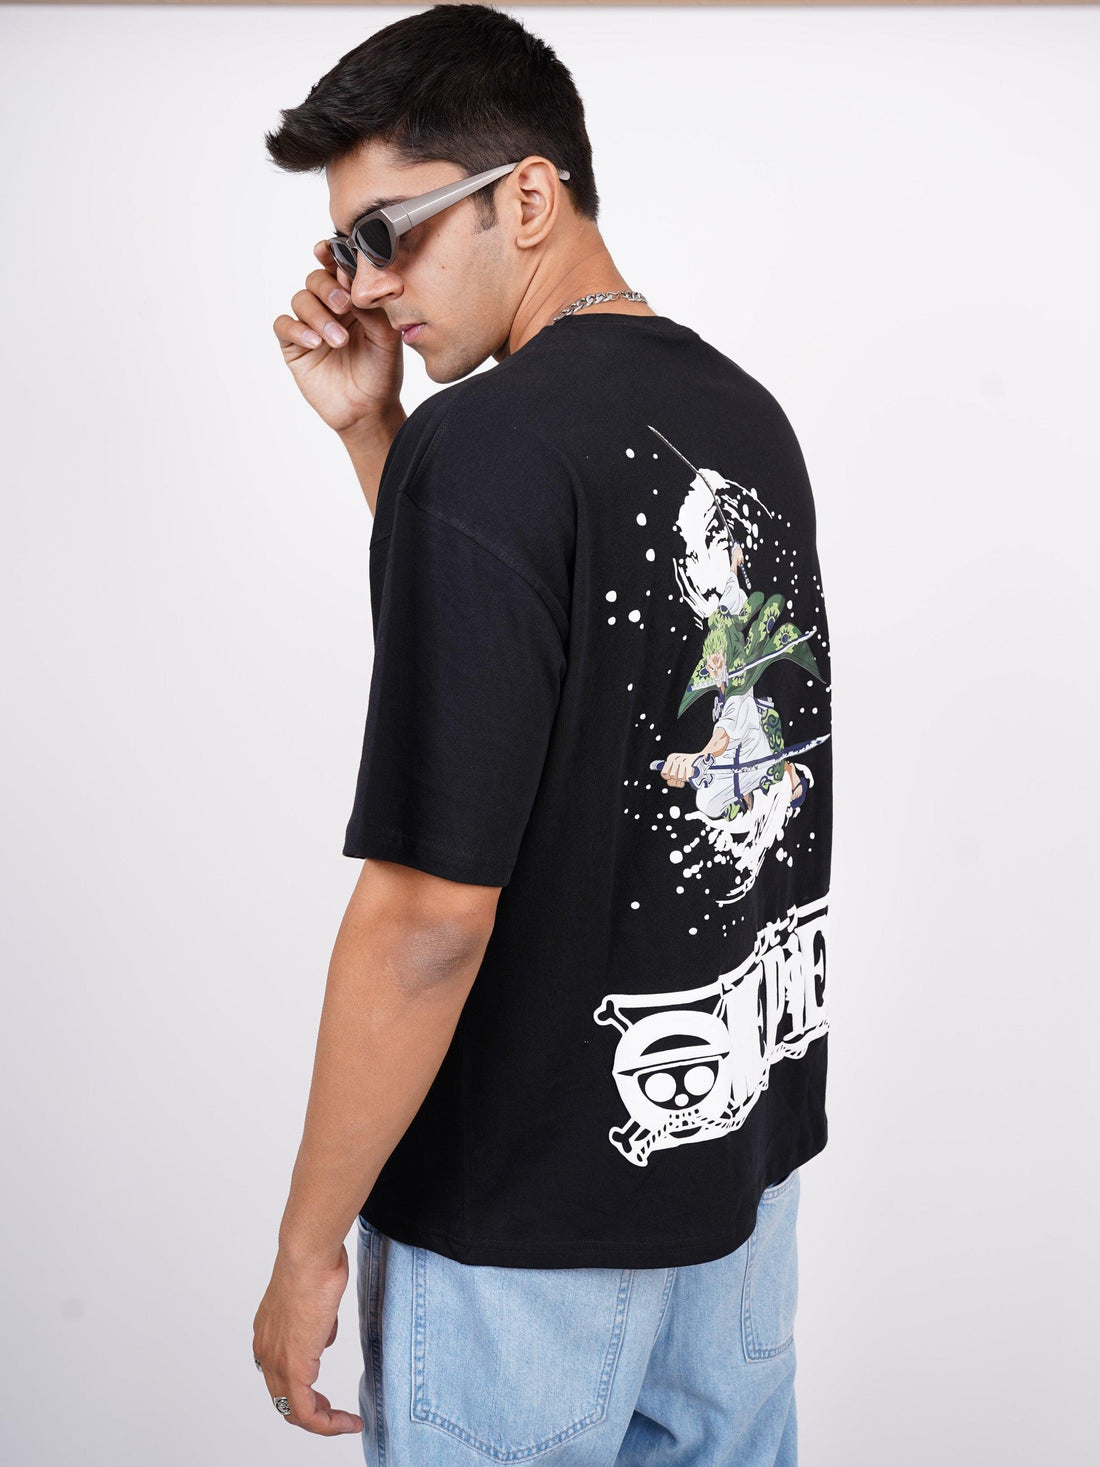 Roronoa zoro - One Piece Drop Sleeved Tee (T-shirt For Men) - BurgerBae